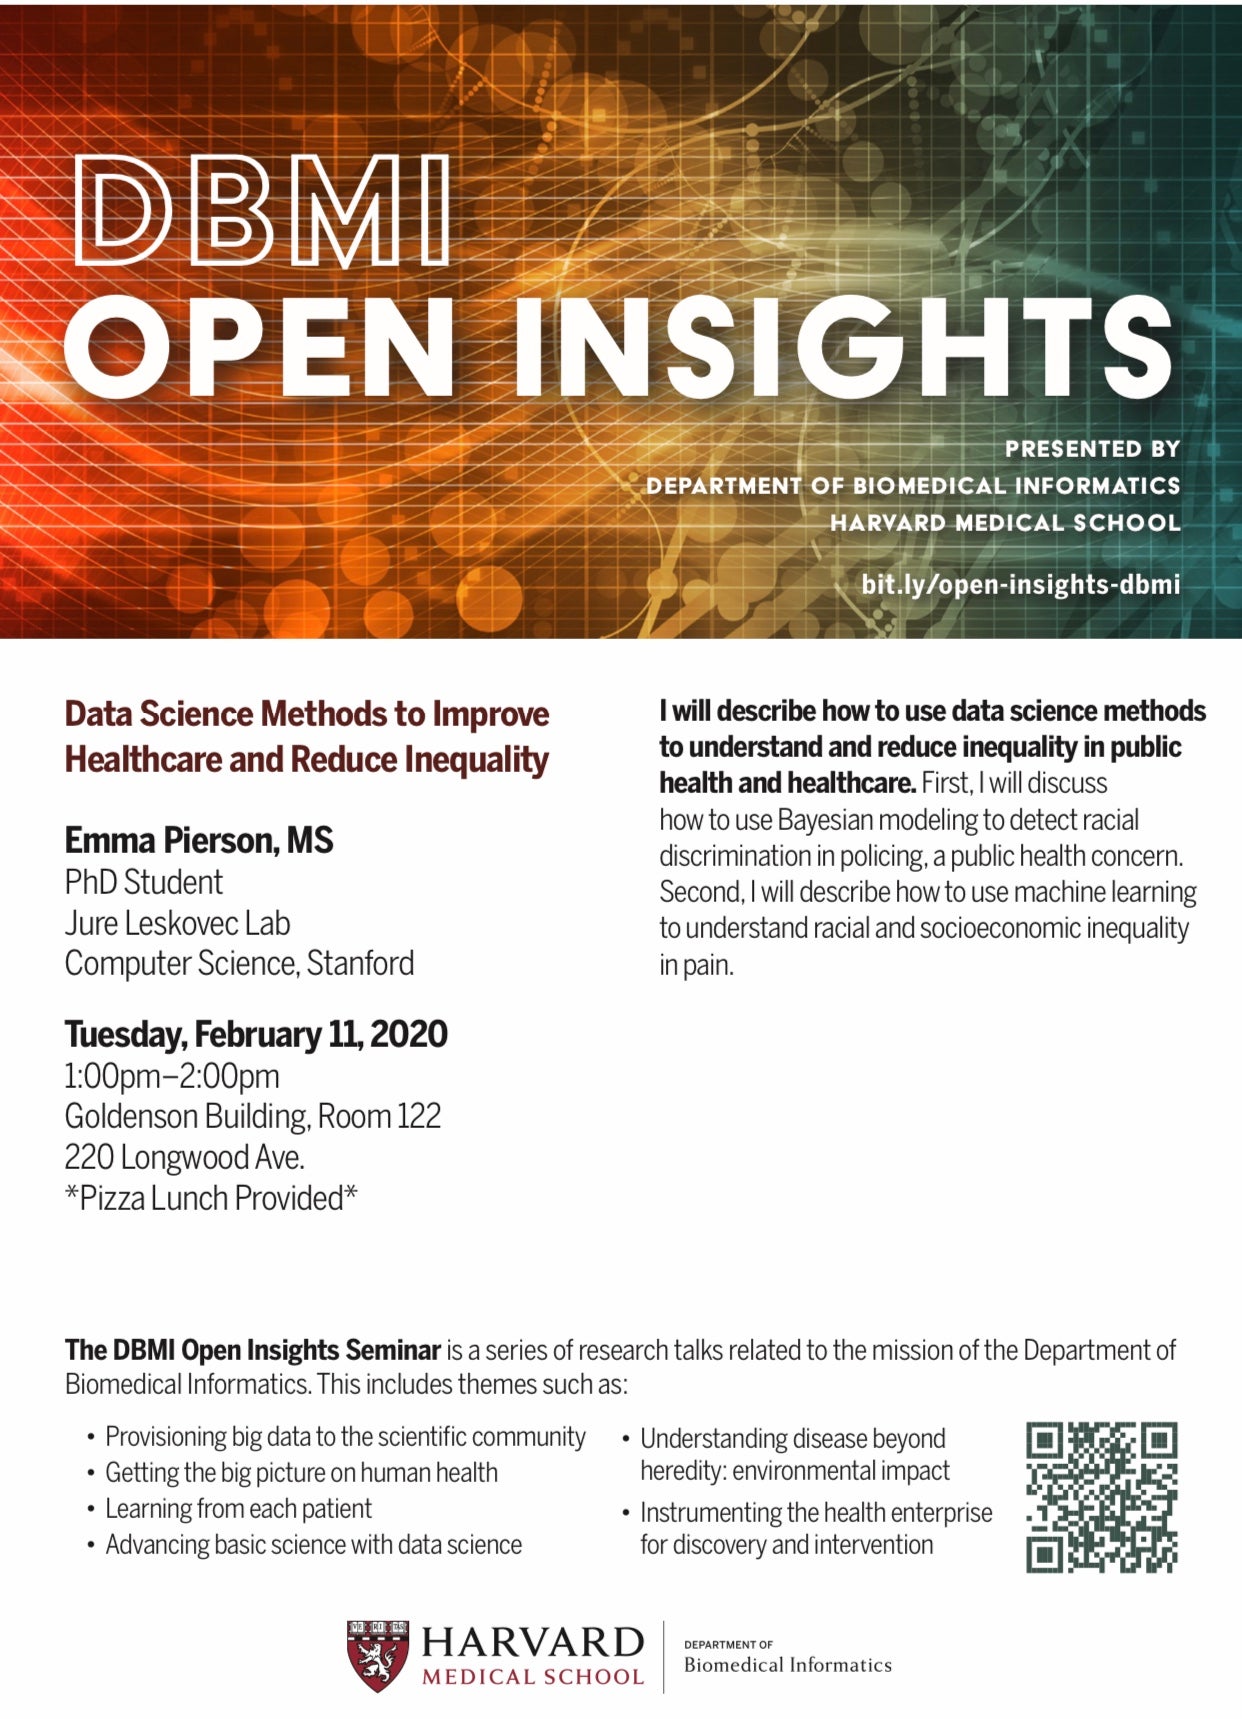 DBMI Open Insights Seminar